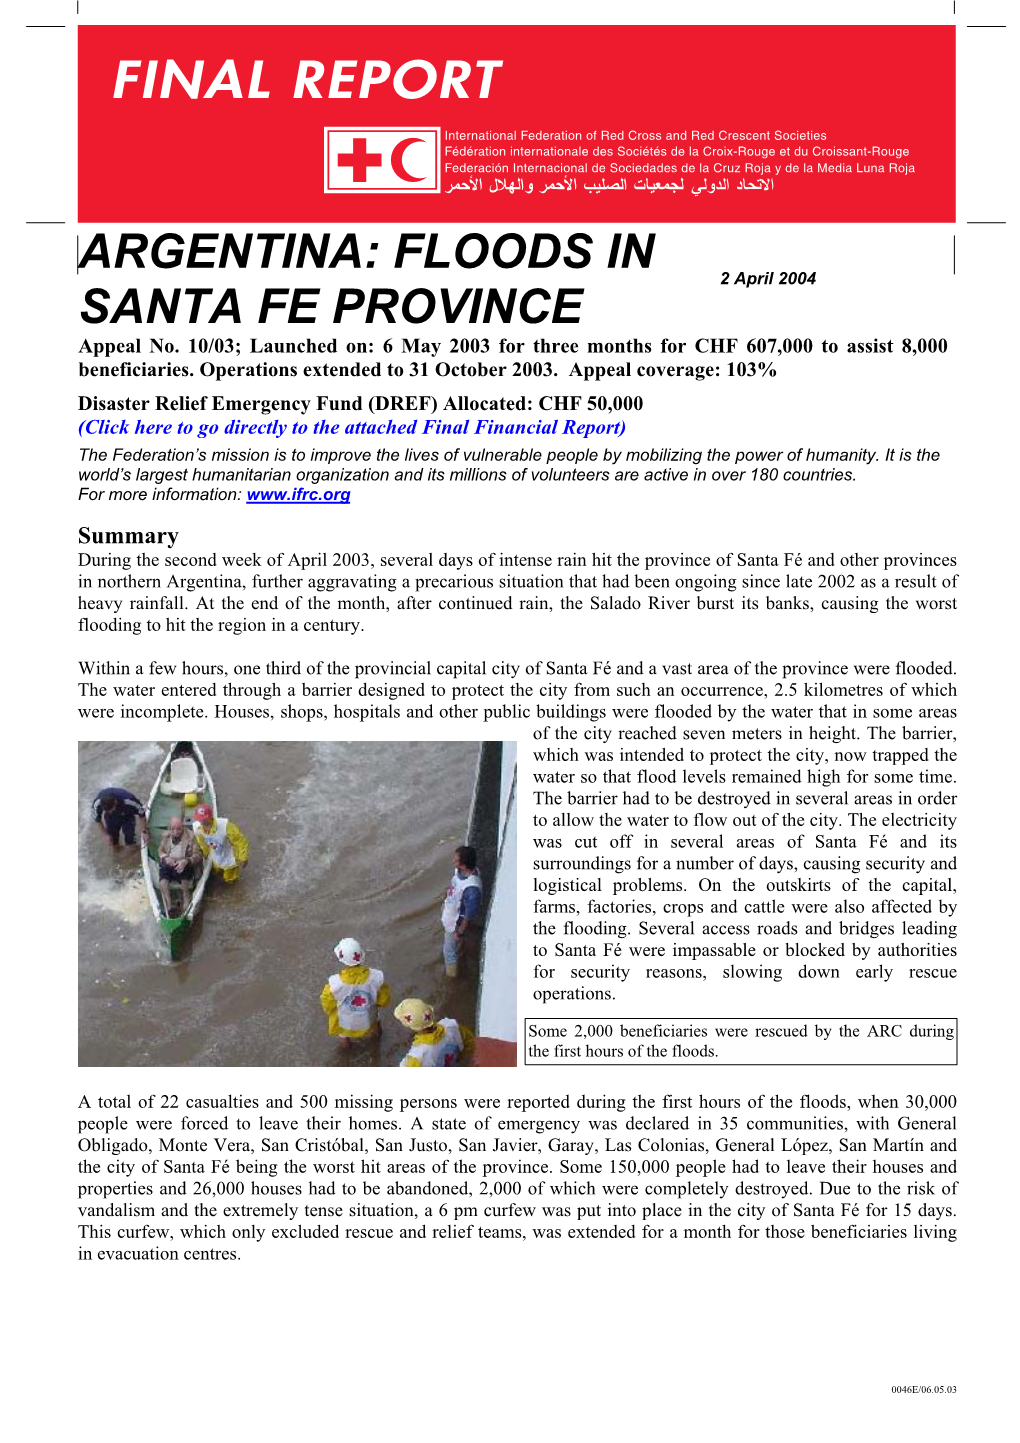 Argentina: Floods in Santa Fe Province